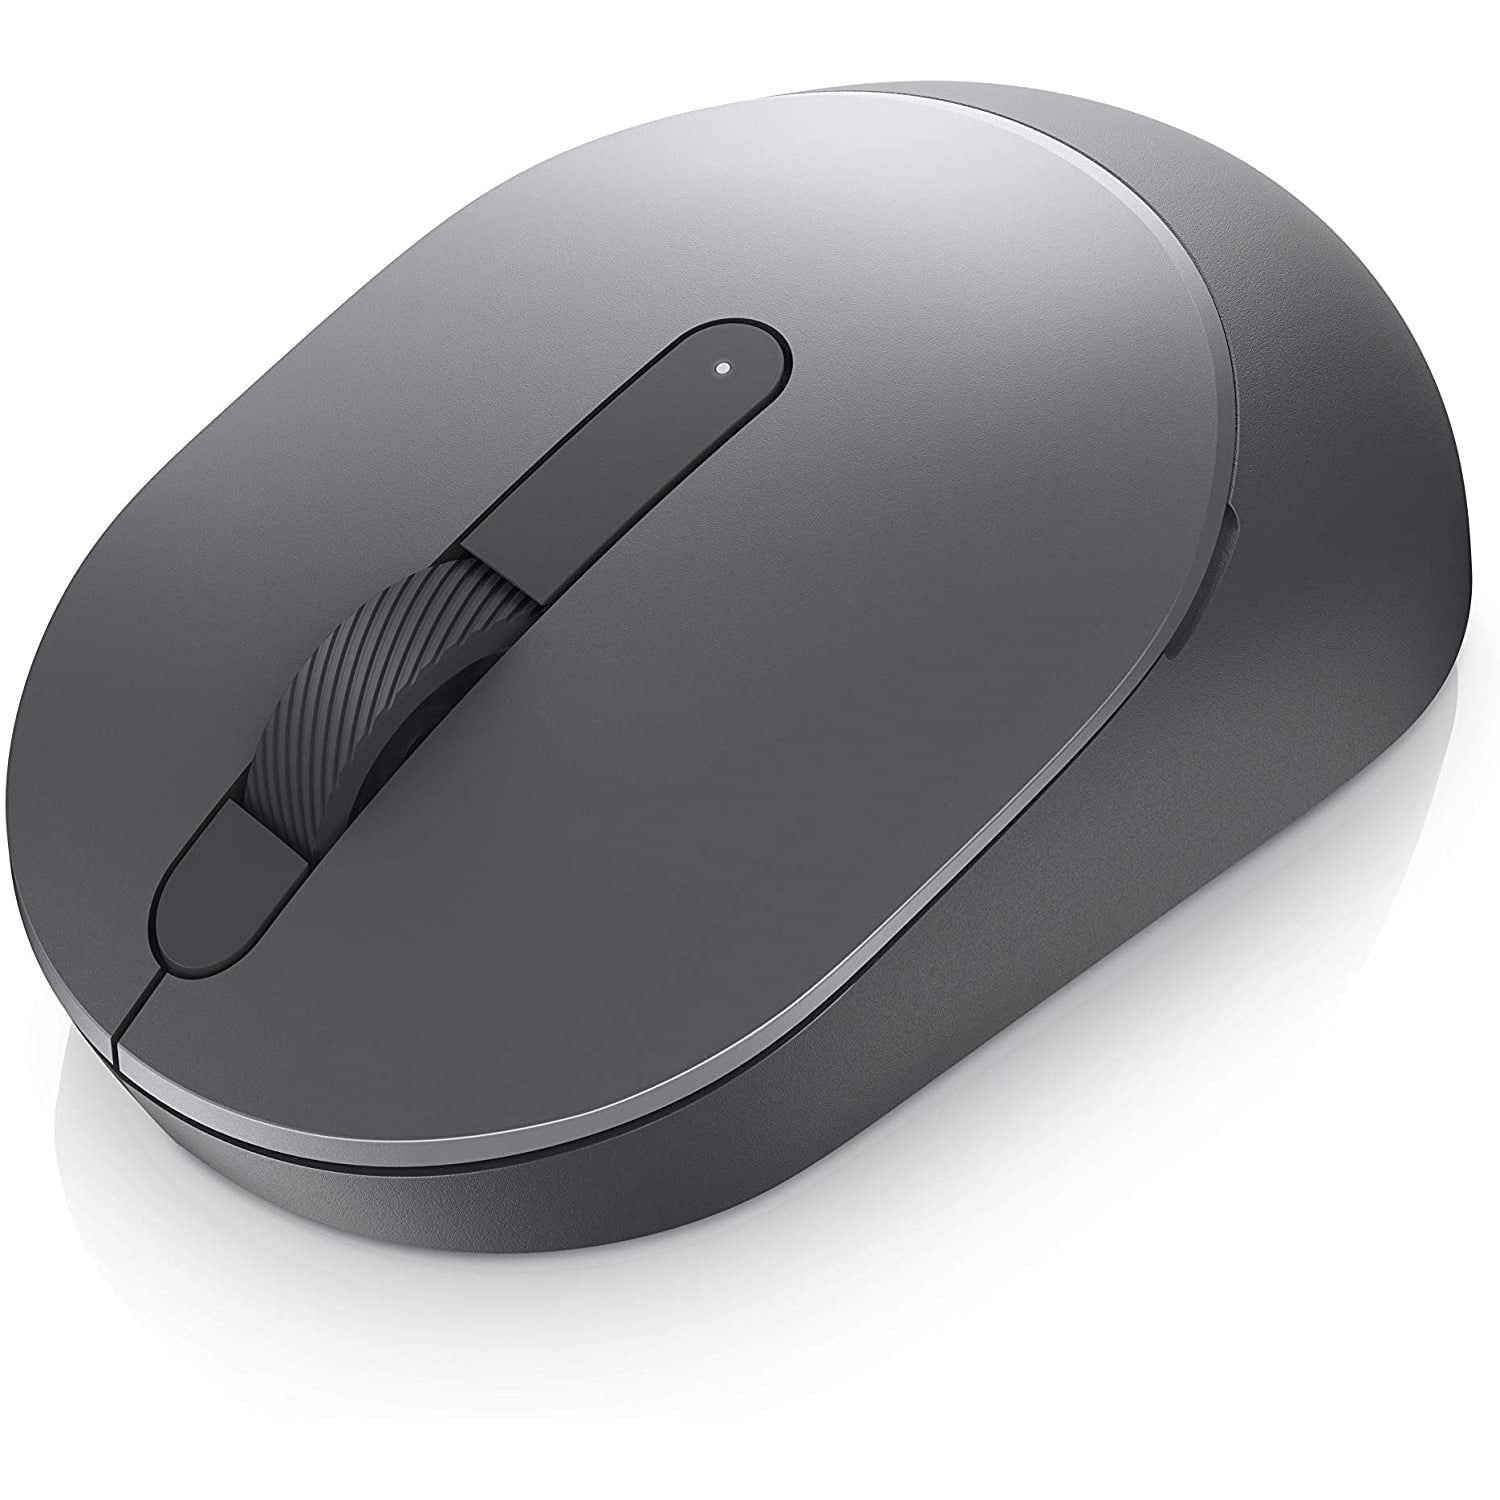 Dell MS3320W Wireless Mouse - Titan Grey